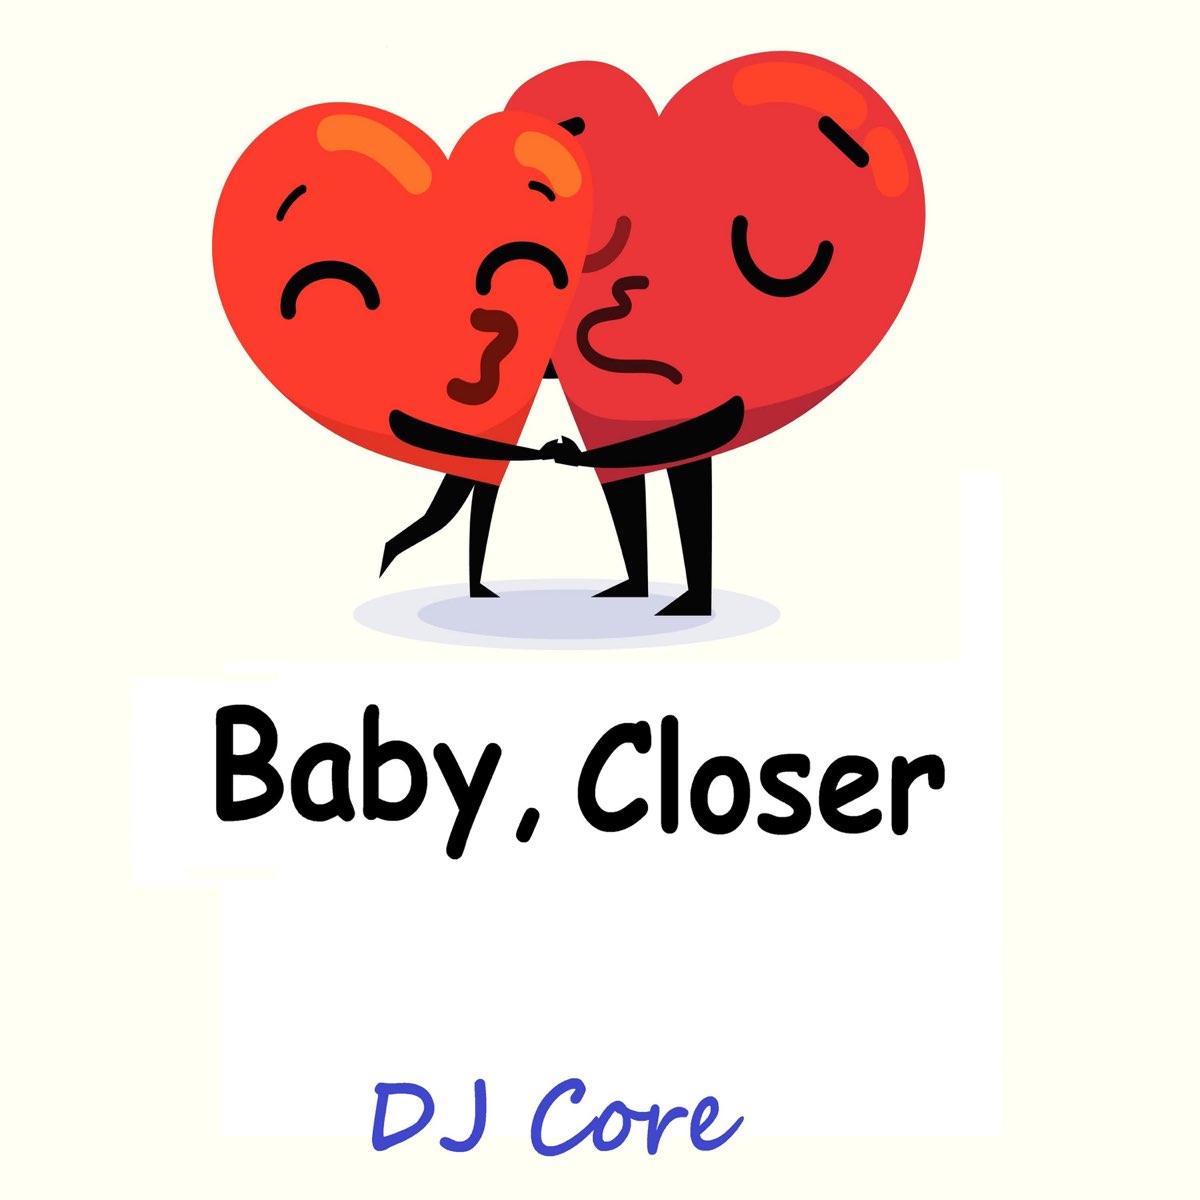 Baby Core. DJ Core. Baby closer